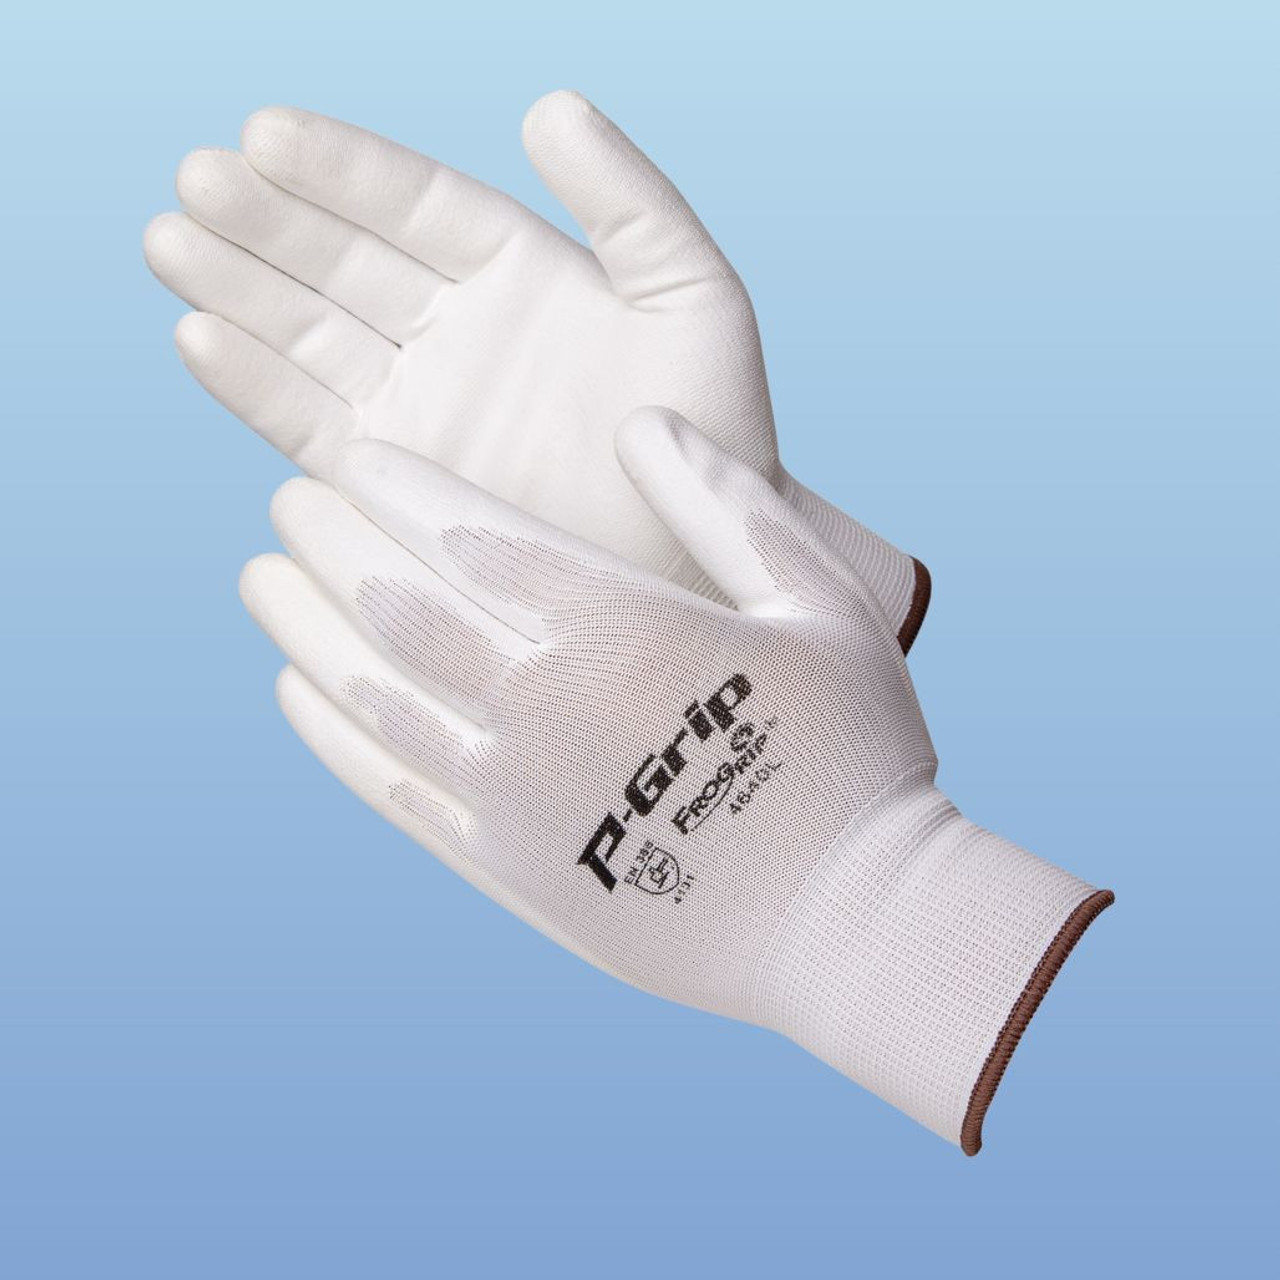 P-Grip Polyurethane Coated Glove, White/White, SM-LG, 12/pair